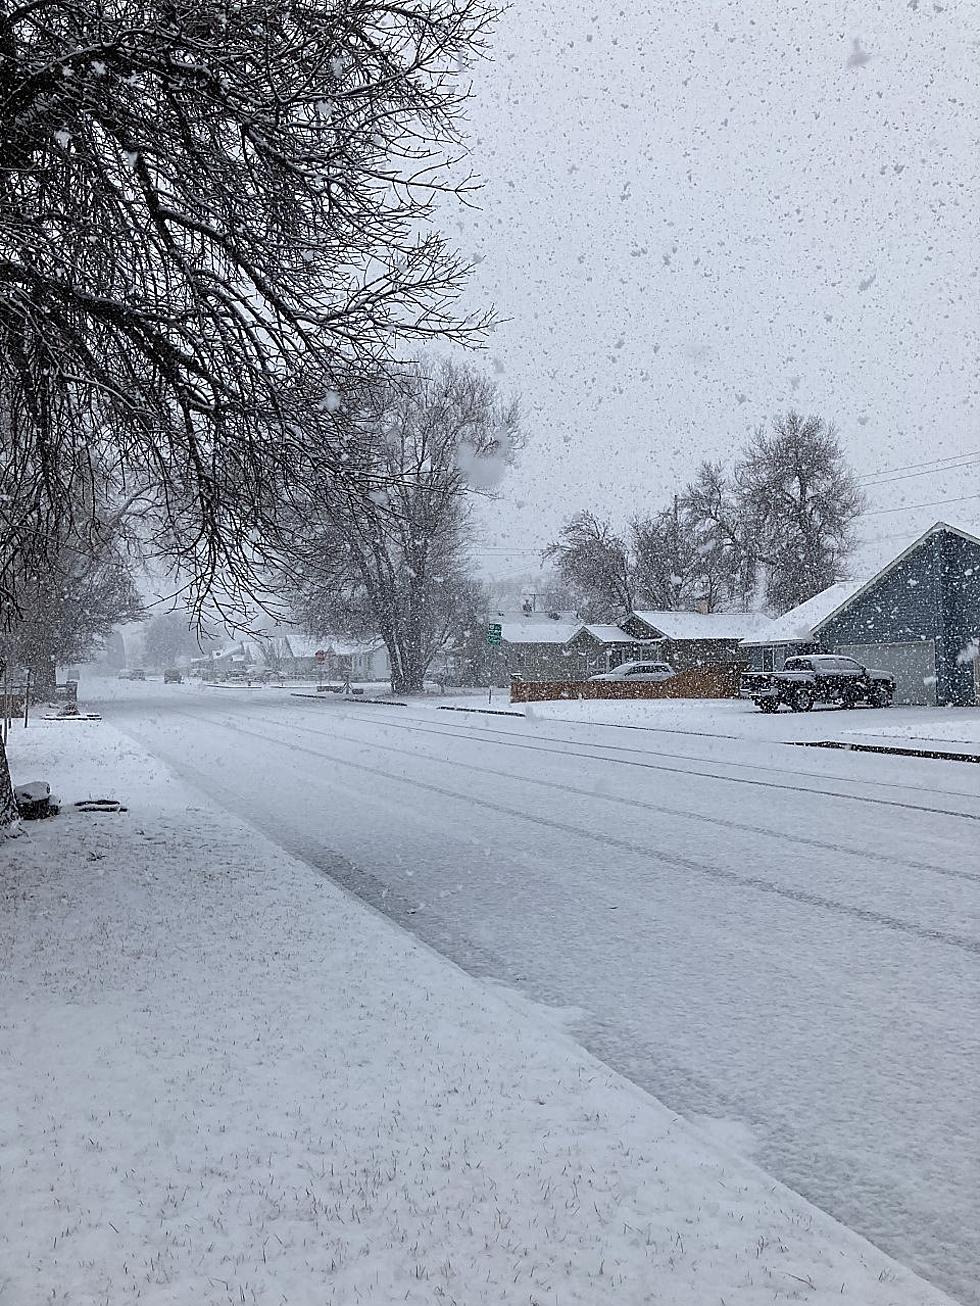 White Christmas for Many Parts of Idaho